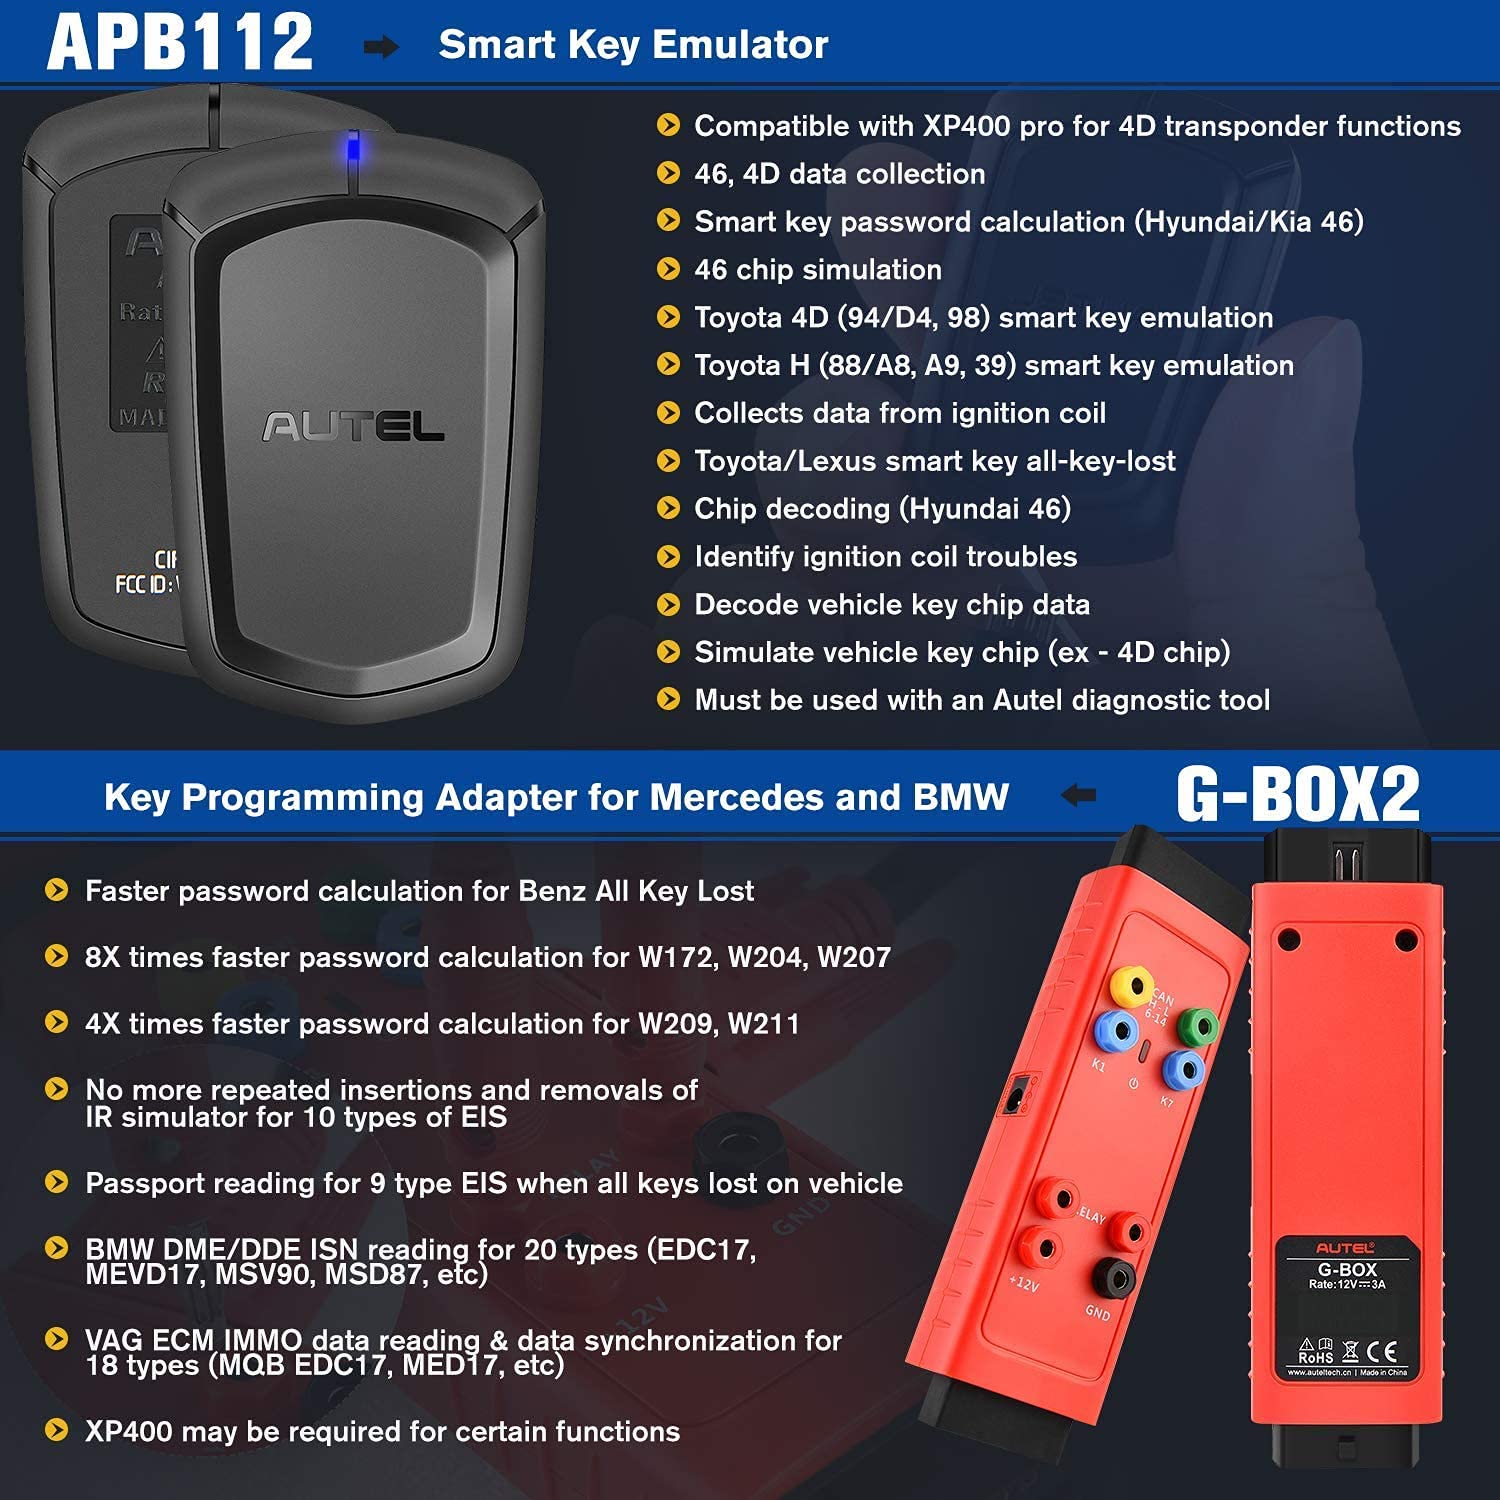 AUTEL APB112 & G-BOX 2